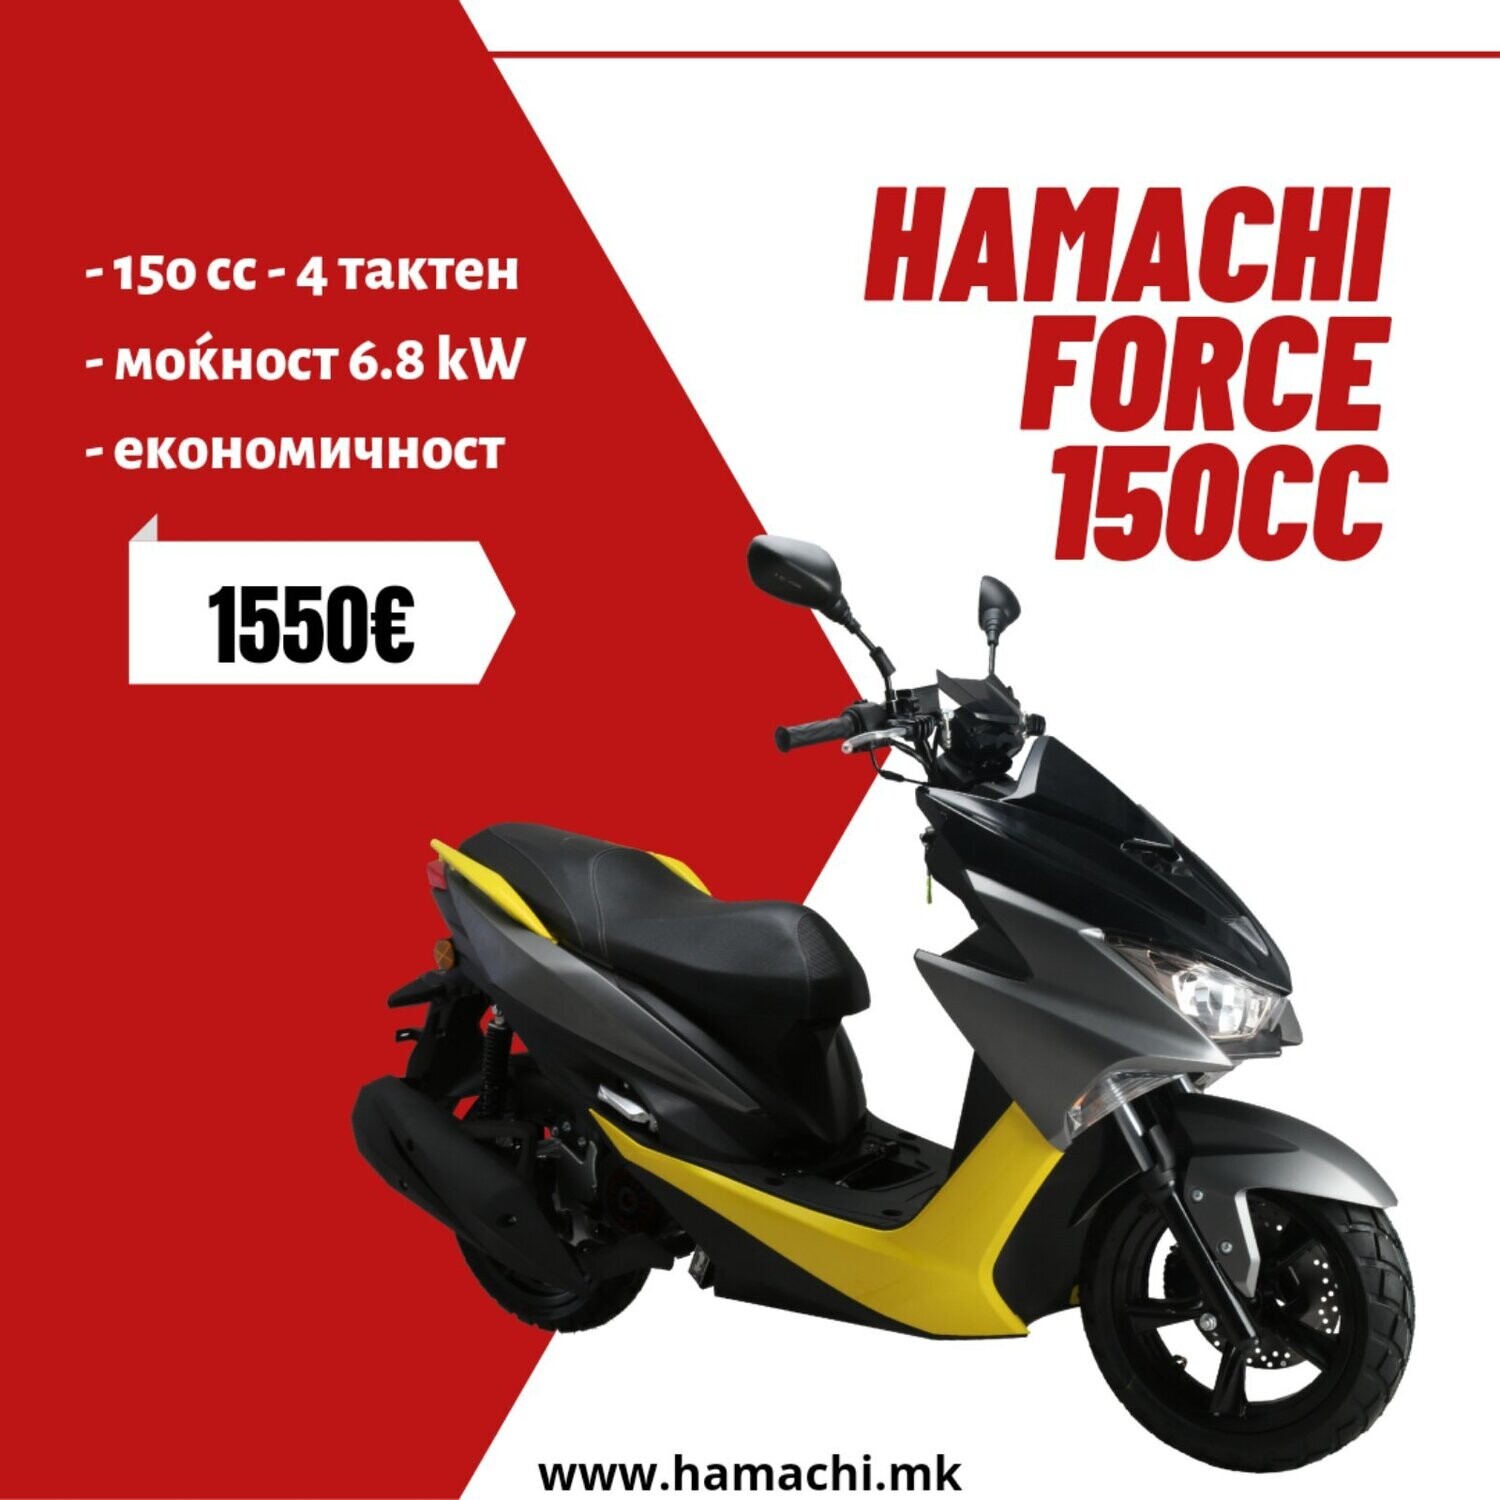 HAMACHI FORCE 150cc